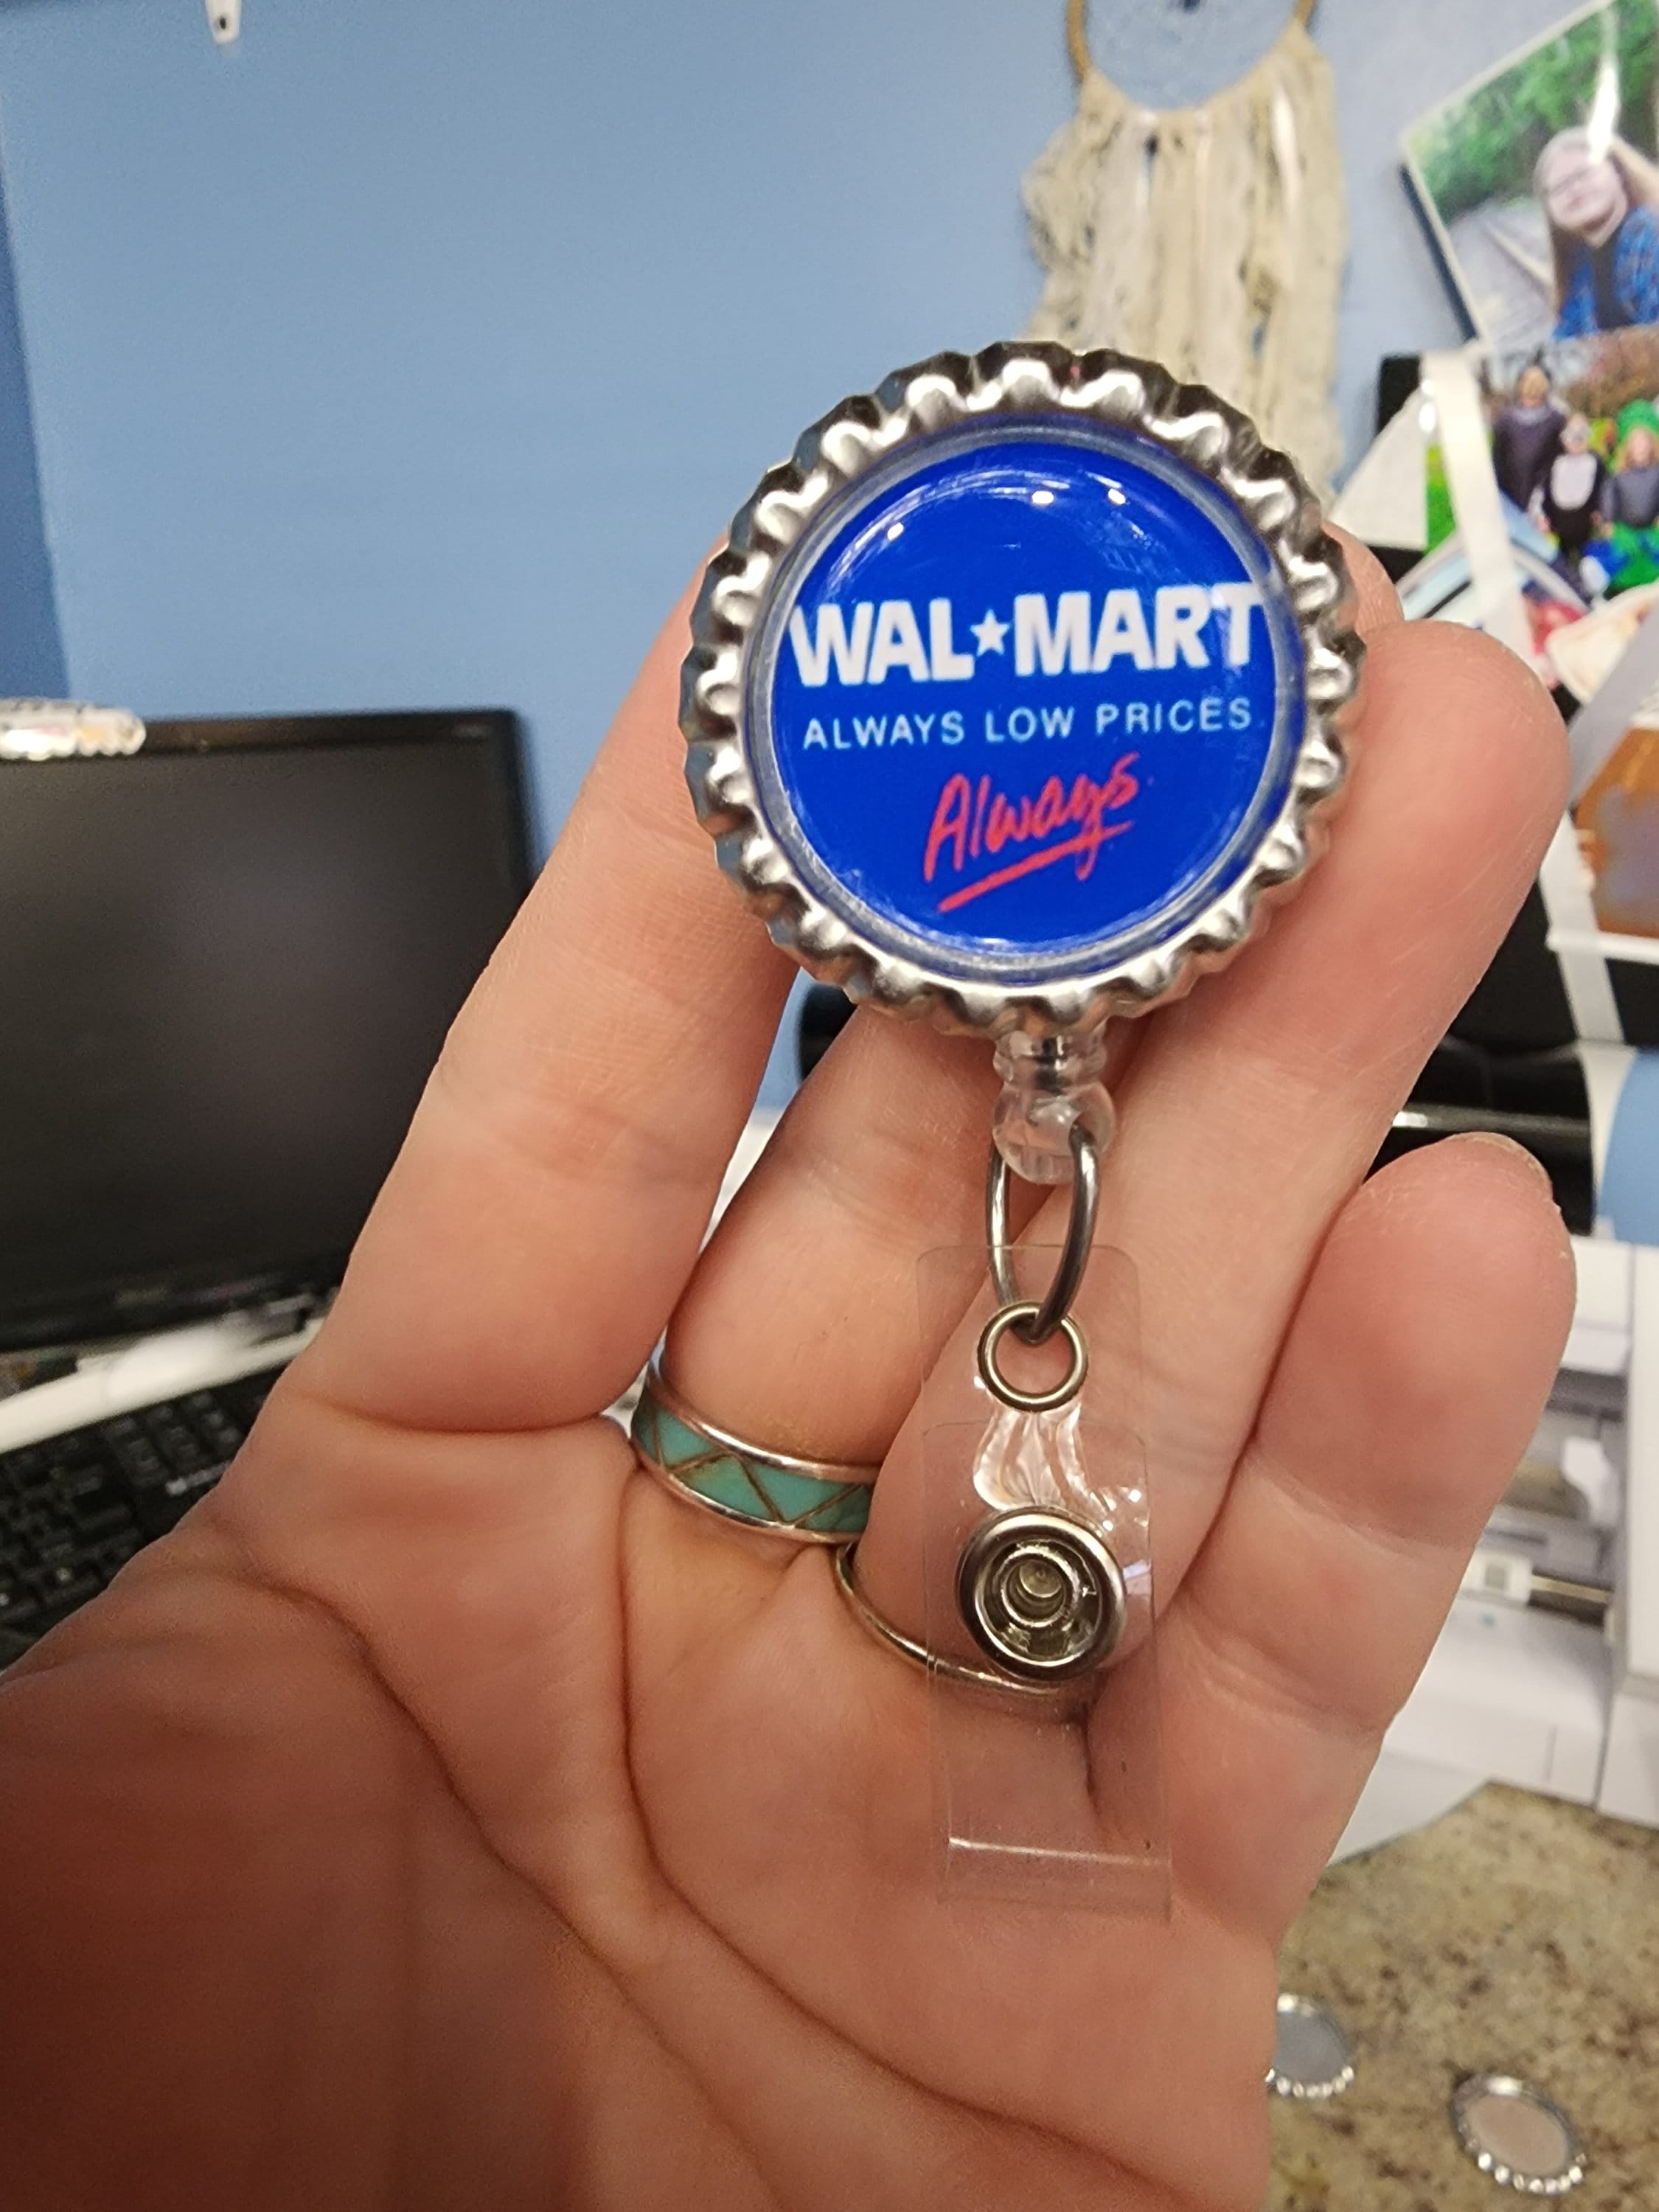 Walmart Badge Reel 